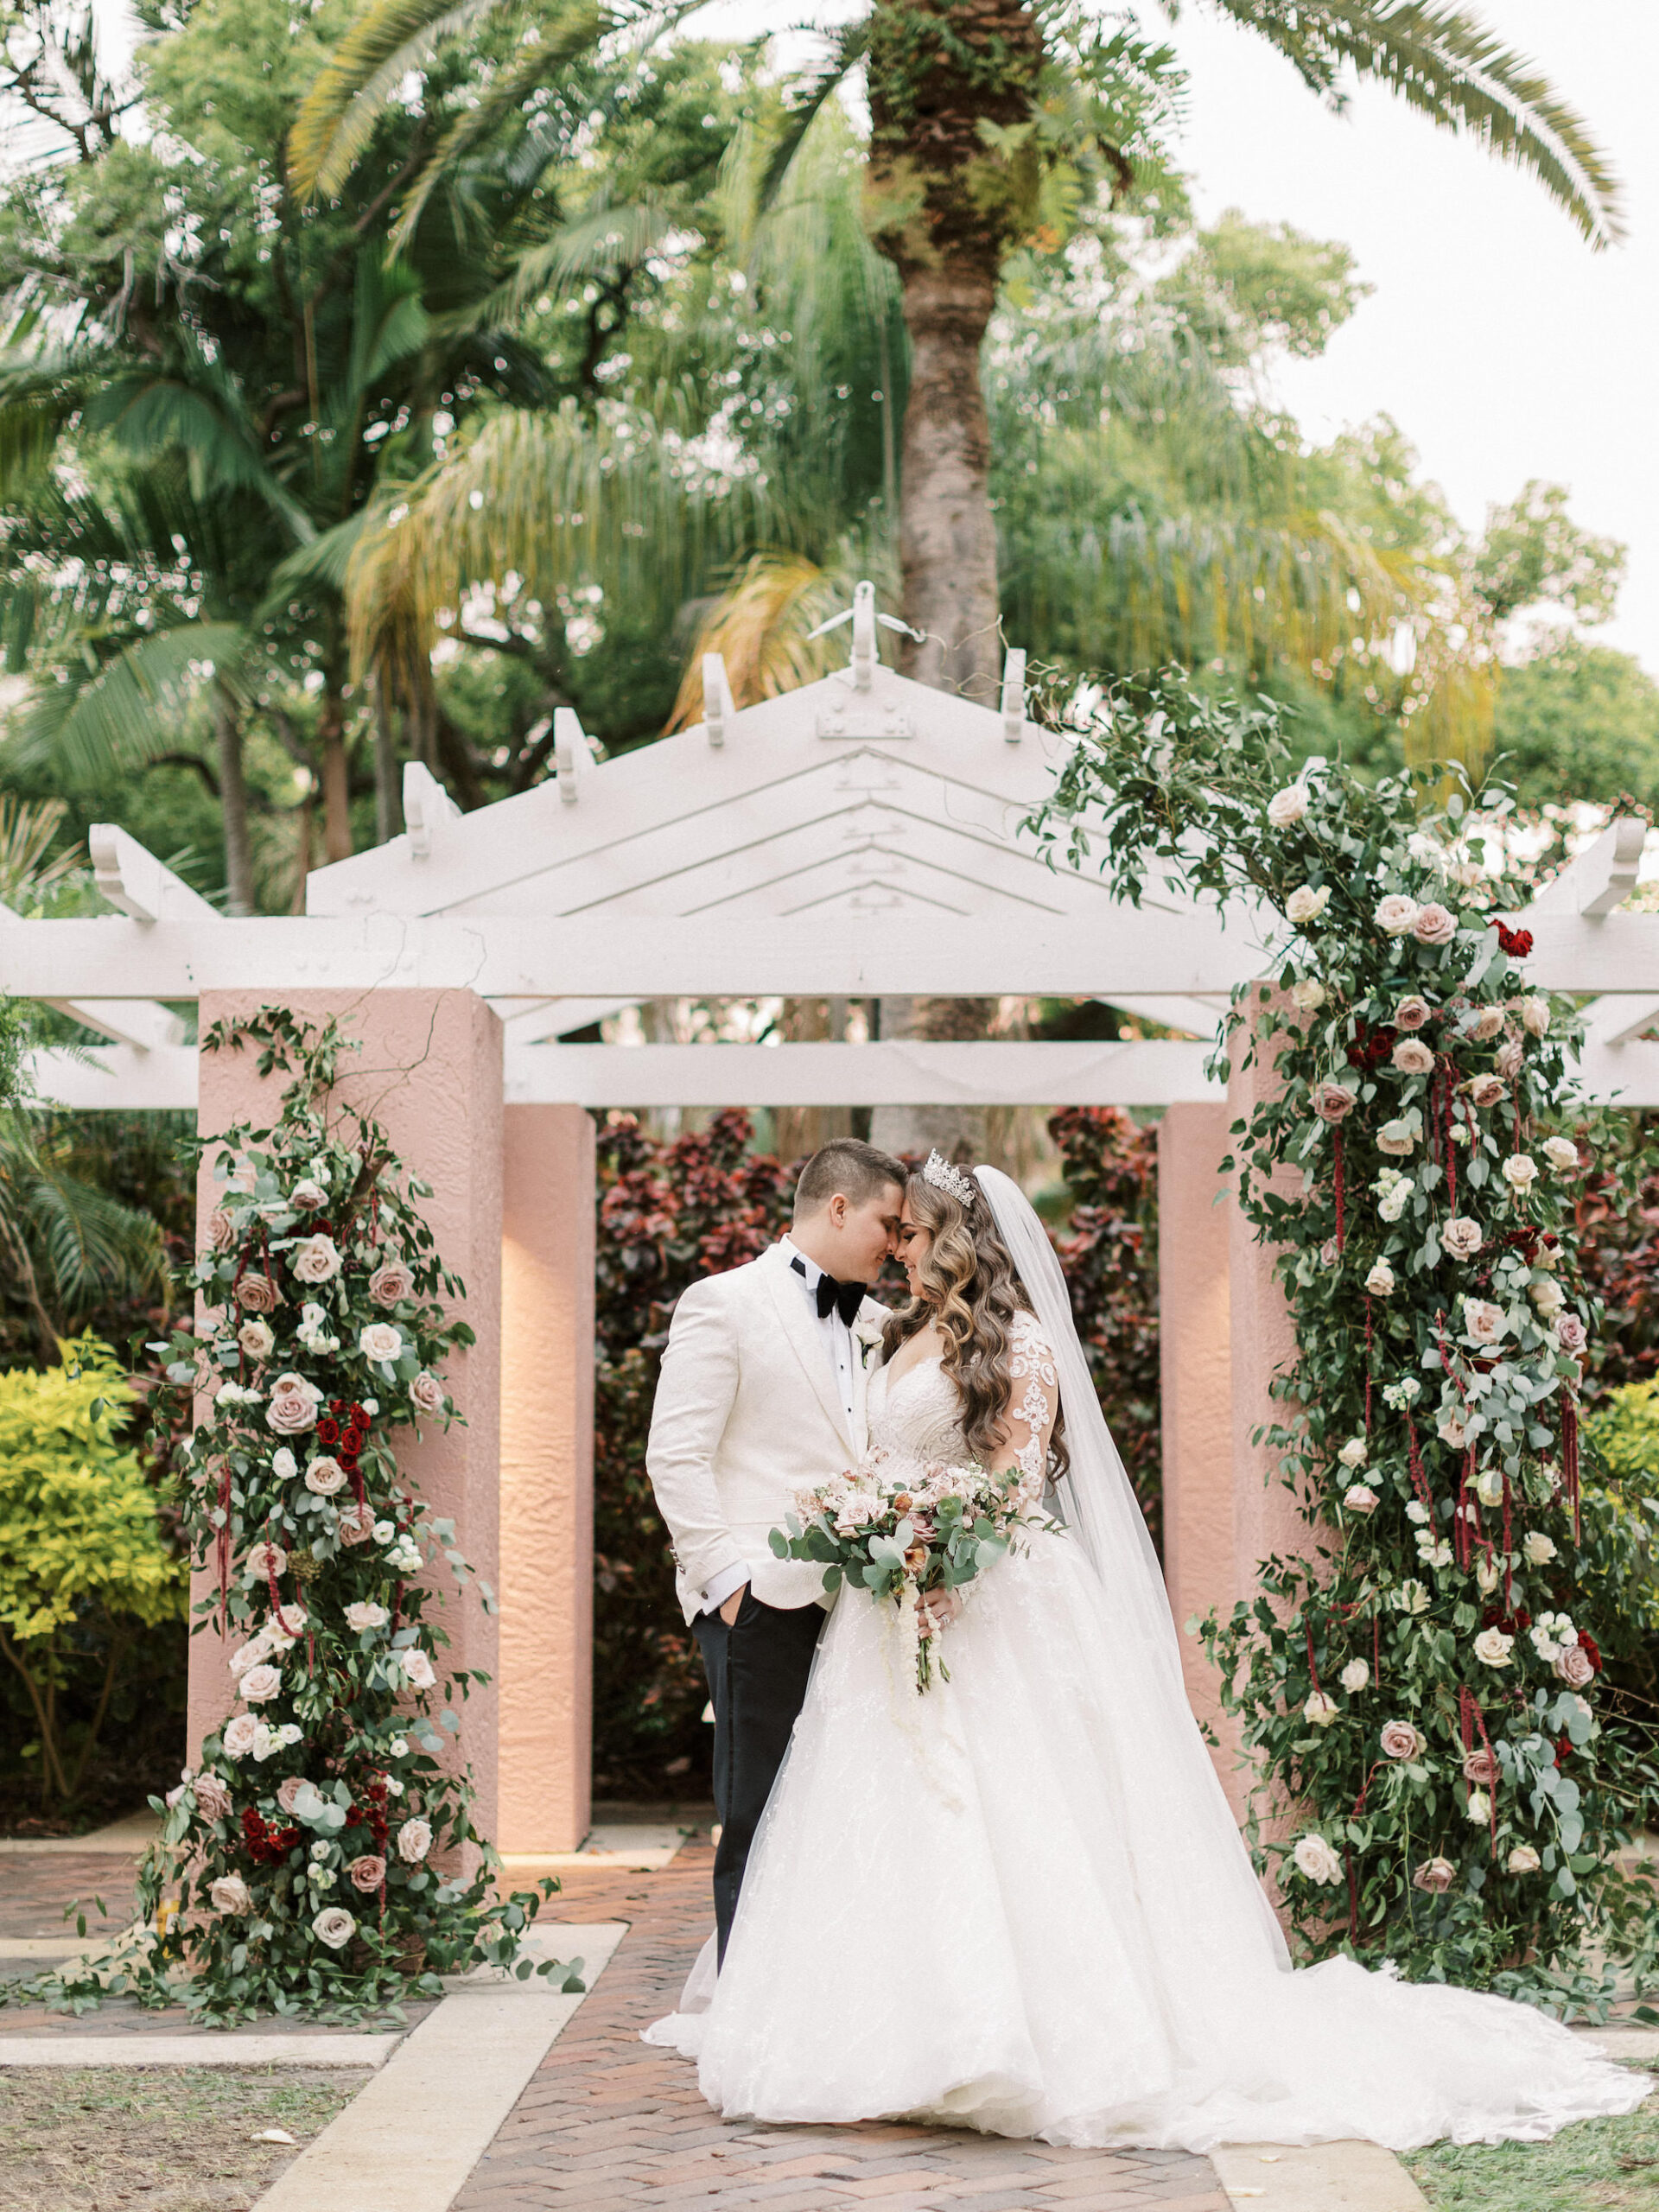 Romantic Royal Glam Gatsby Bride and Groom Wedding Portrait | Tampa Bay Wedding Planner and Designer John Campbell Weddings | Outdoor Courtyard St. Pete Wedding Venue The Vinoy Renaissance